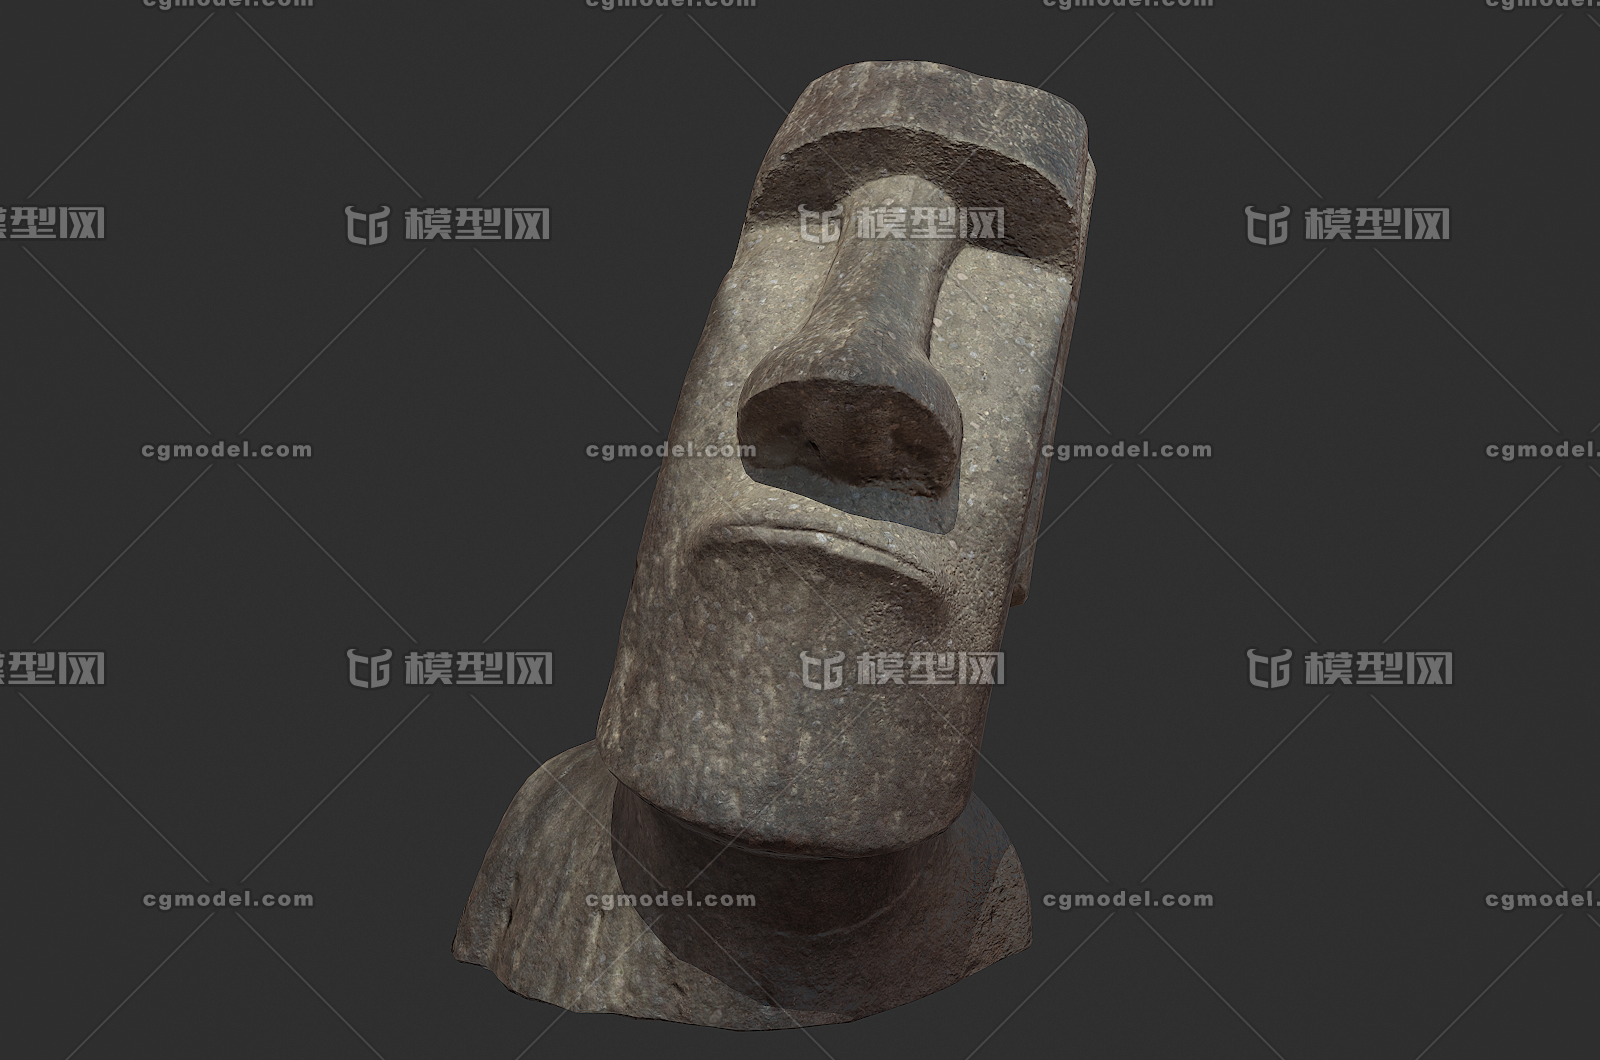 136 pbr次世代 复活节岛石像 moai 摩埃 毛埃 摩艾